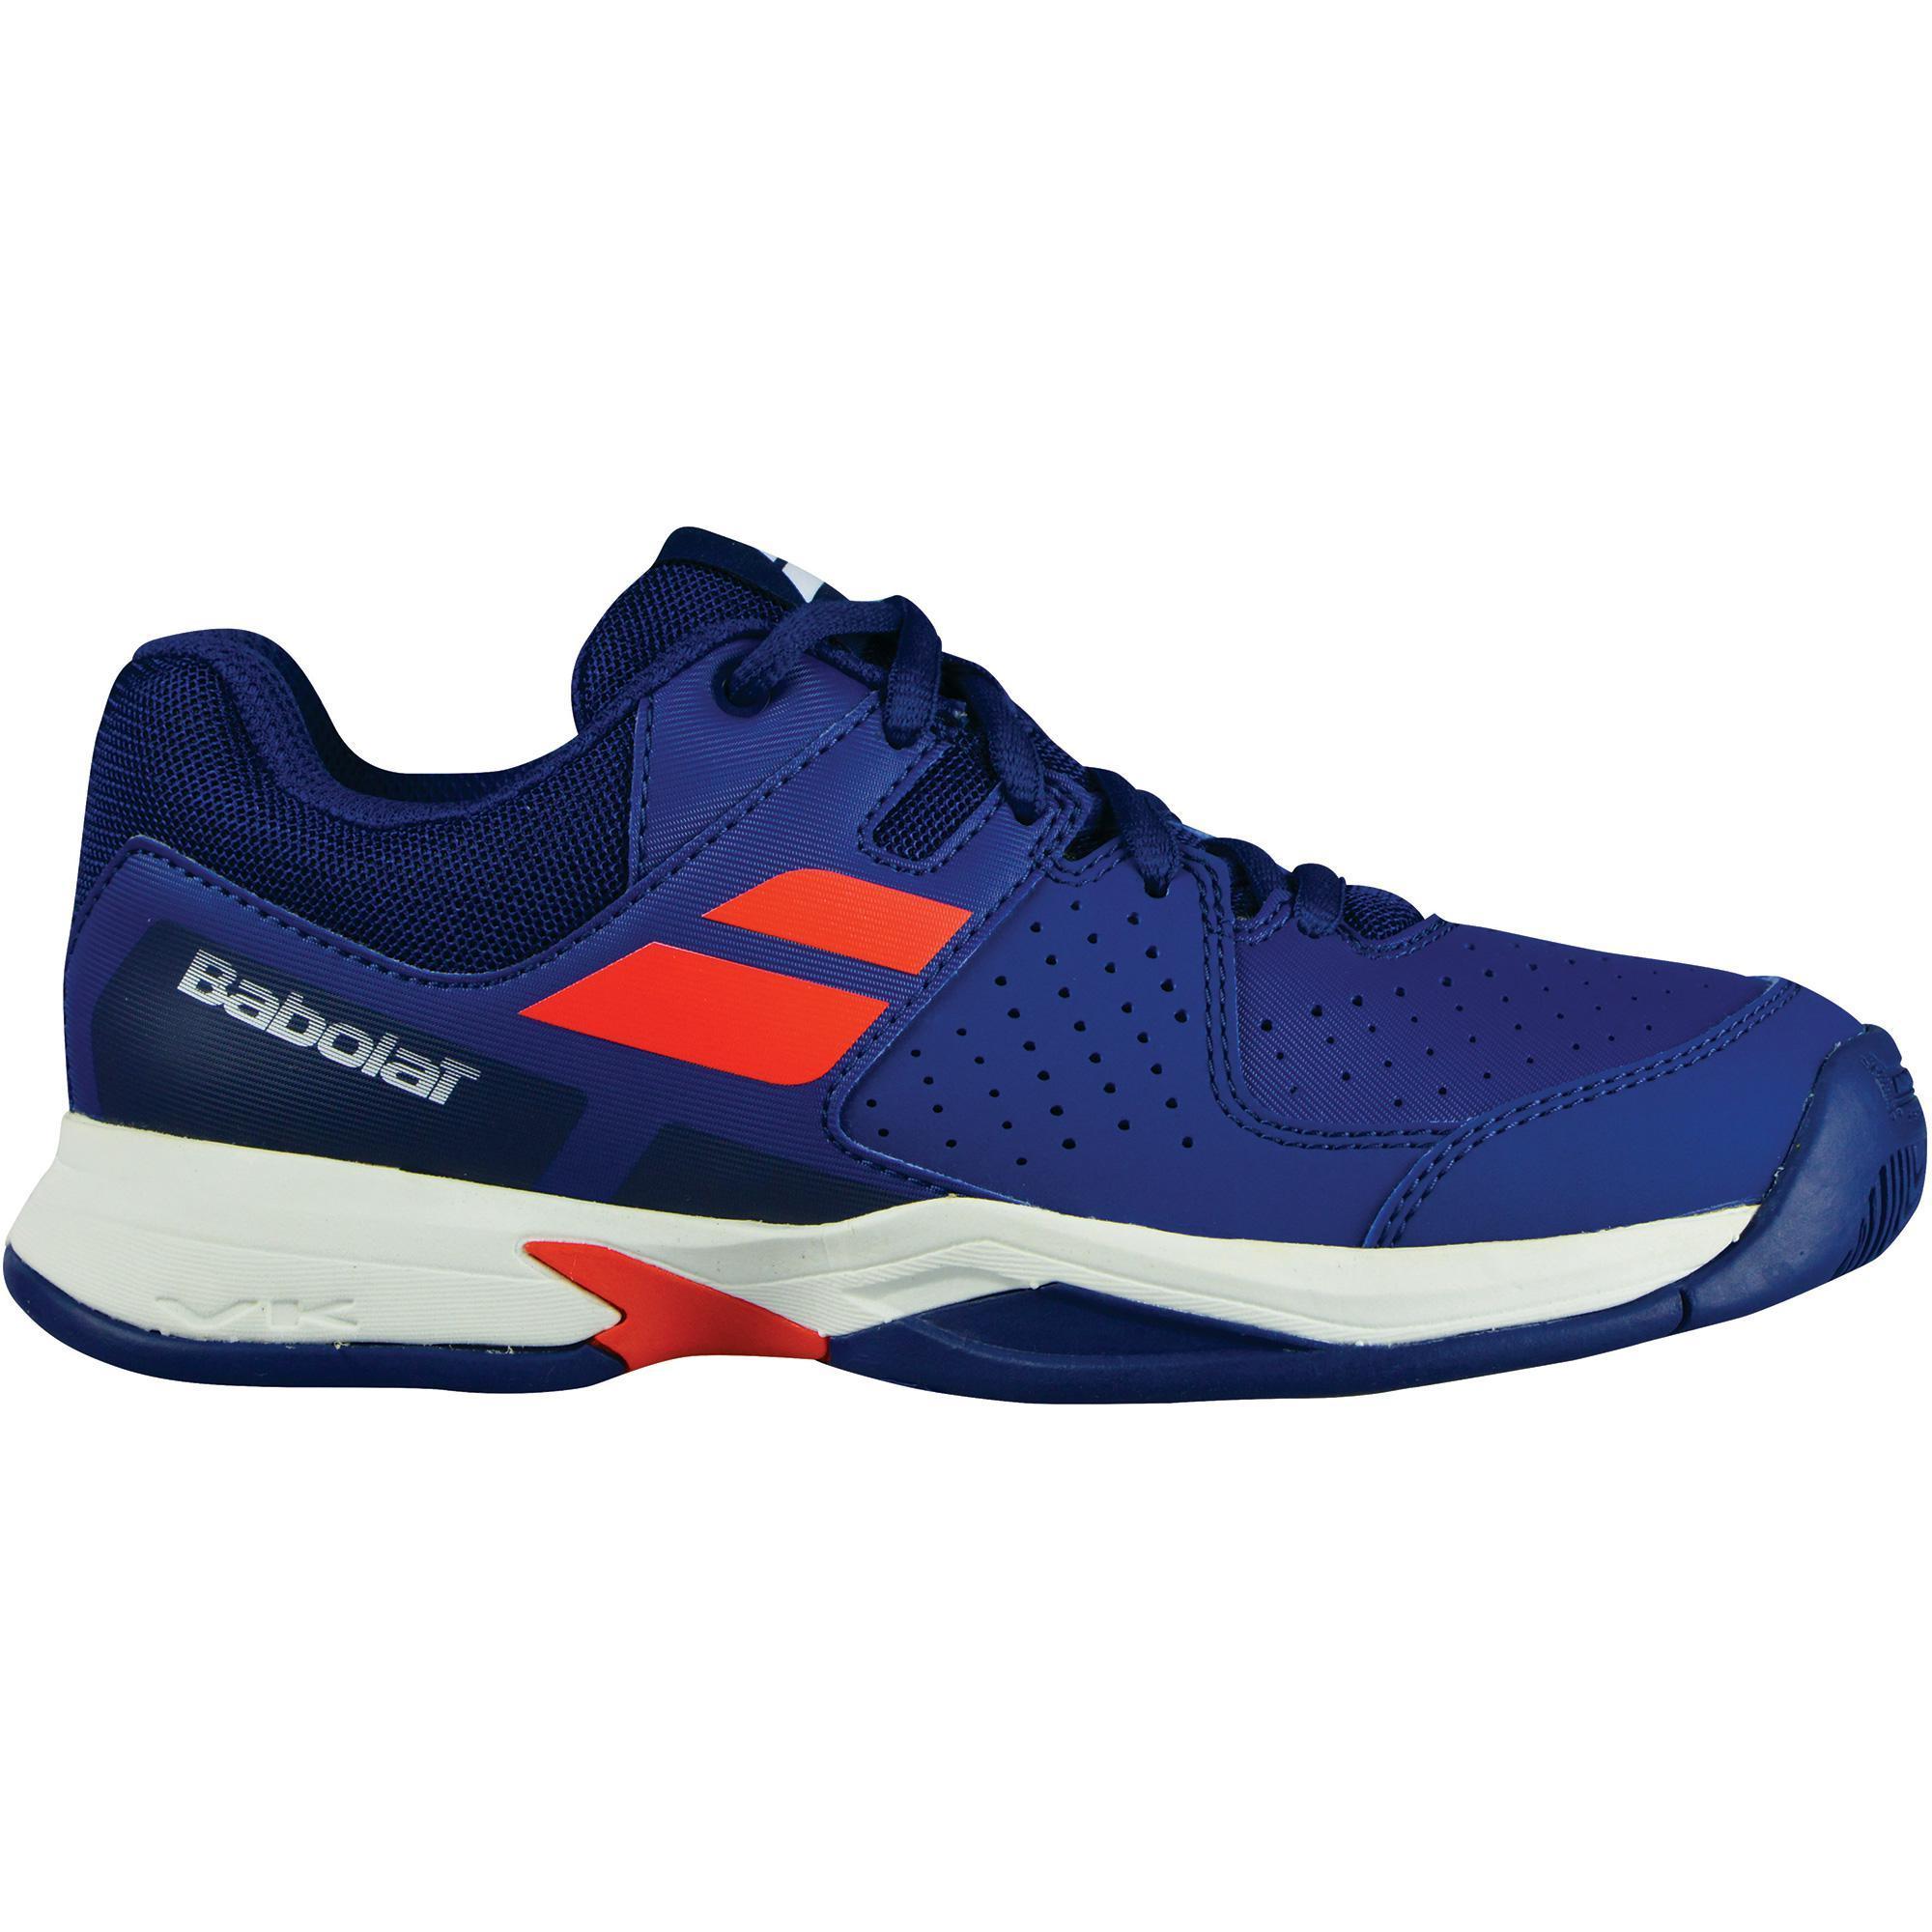 Babolat Babolat Pulsion All Court Jr Tennis Shoes Trainers Blue/Orange Blue Active UK 9 